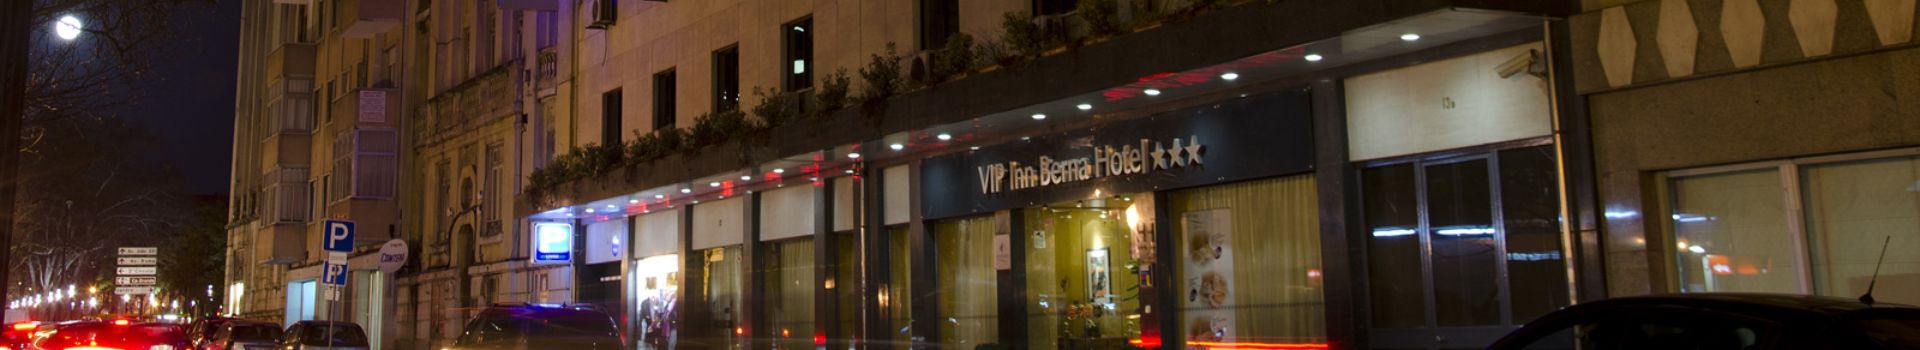  VIP Inn Berna  Lisbon